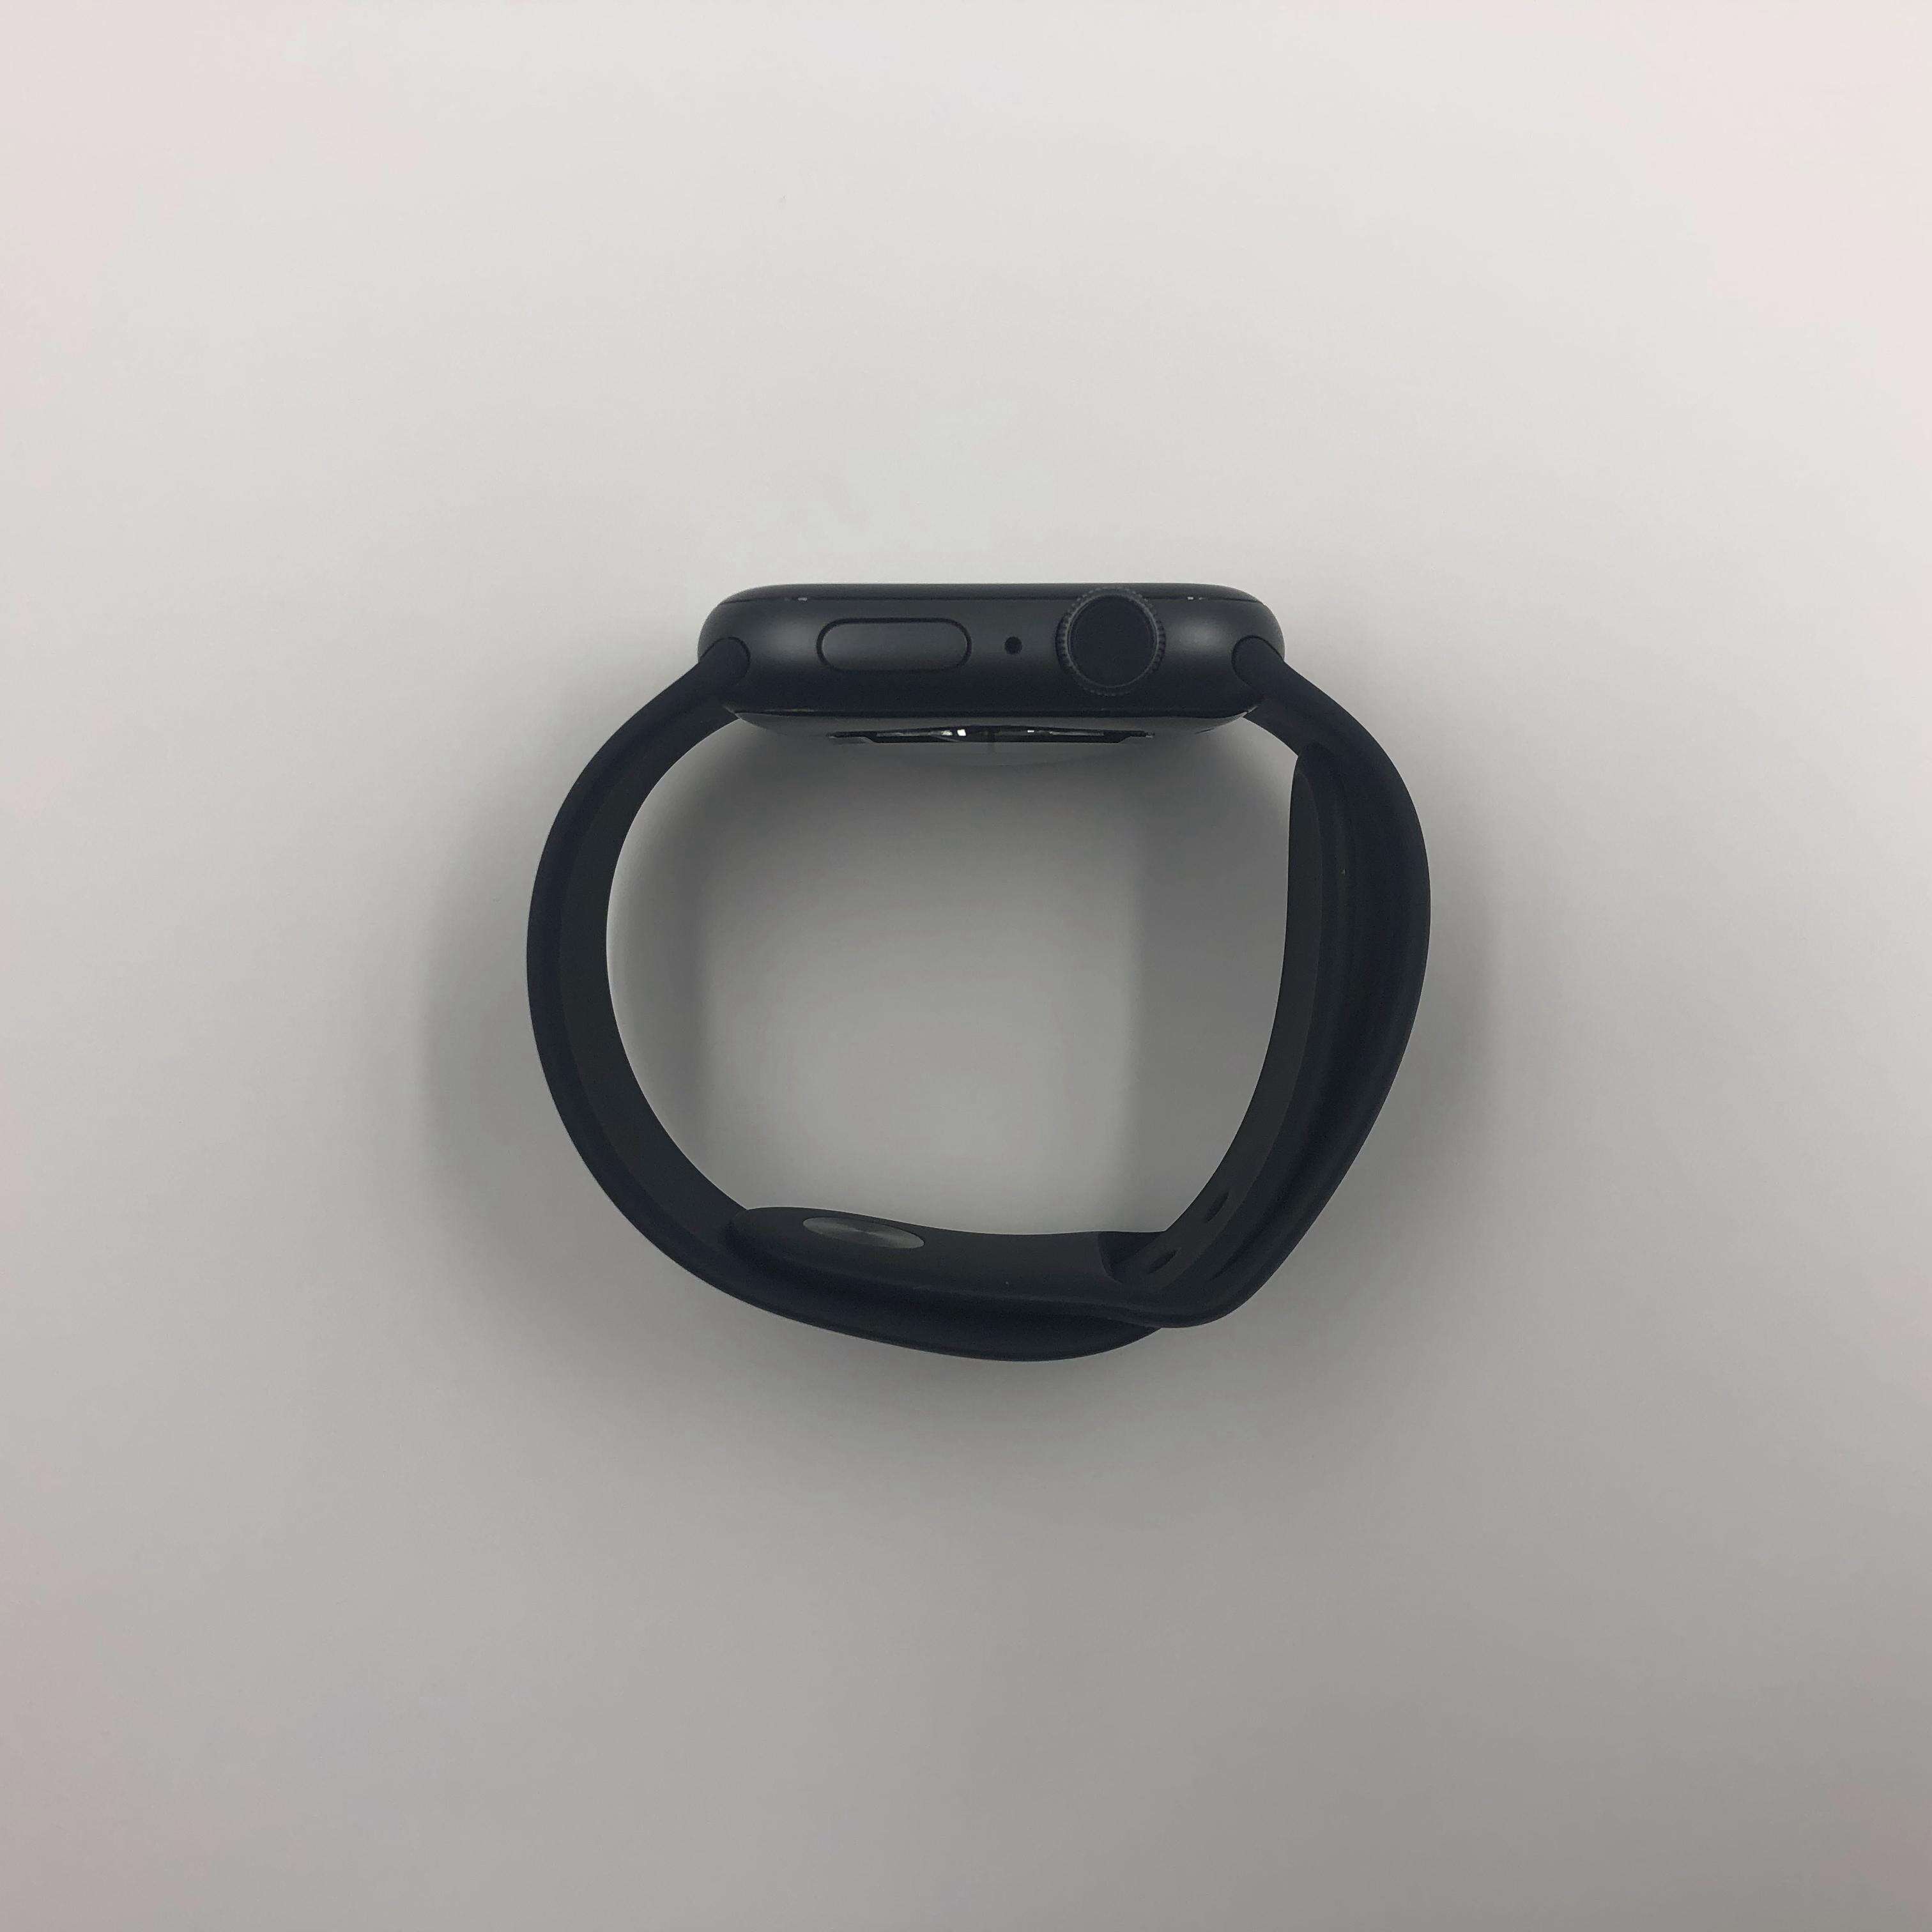 Apple Watch Series 4铝金属表壳 44MM 国行GPS版